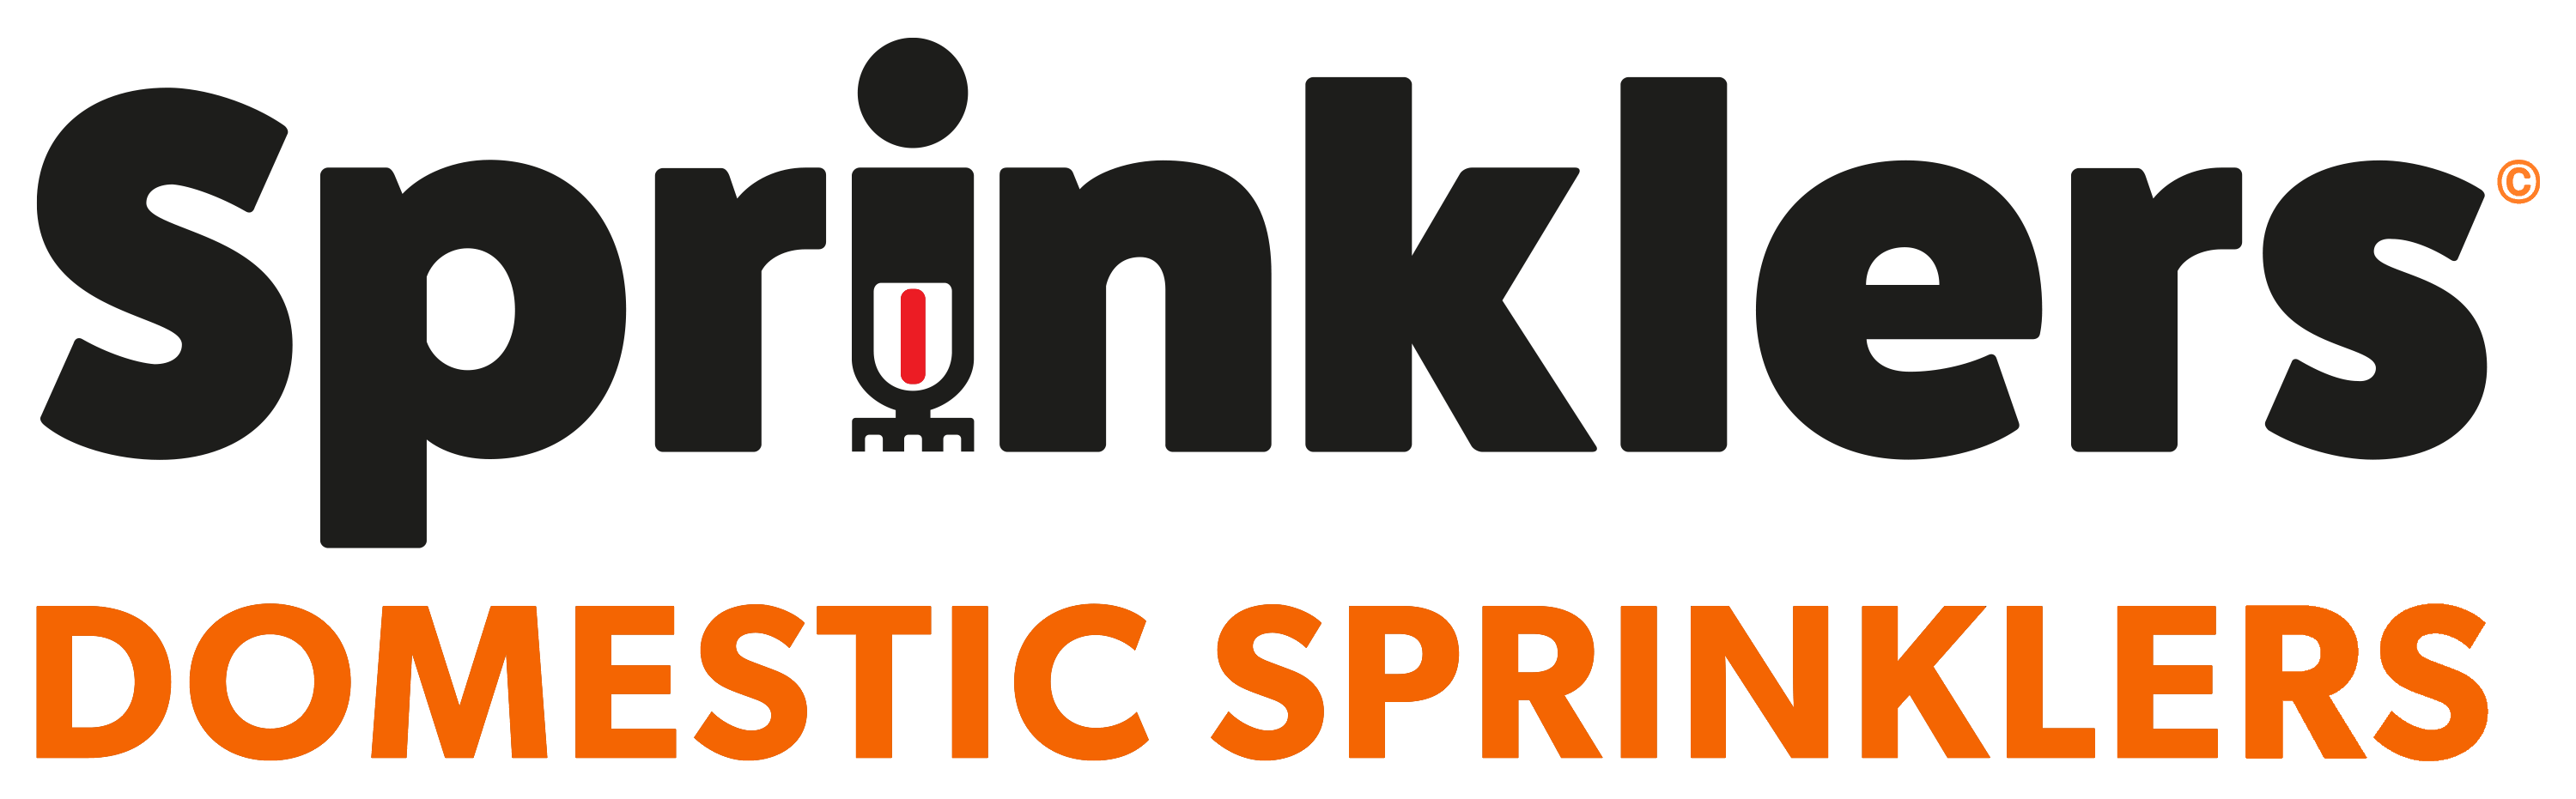 logo for Domestic Sprinklers Limited